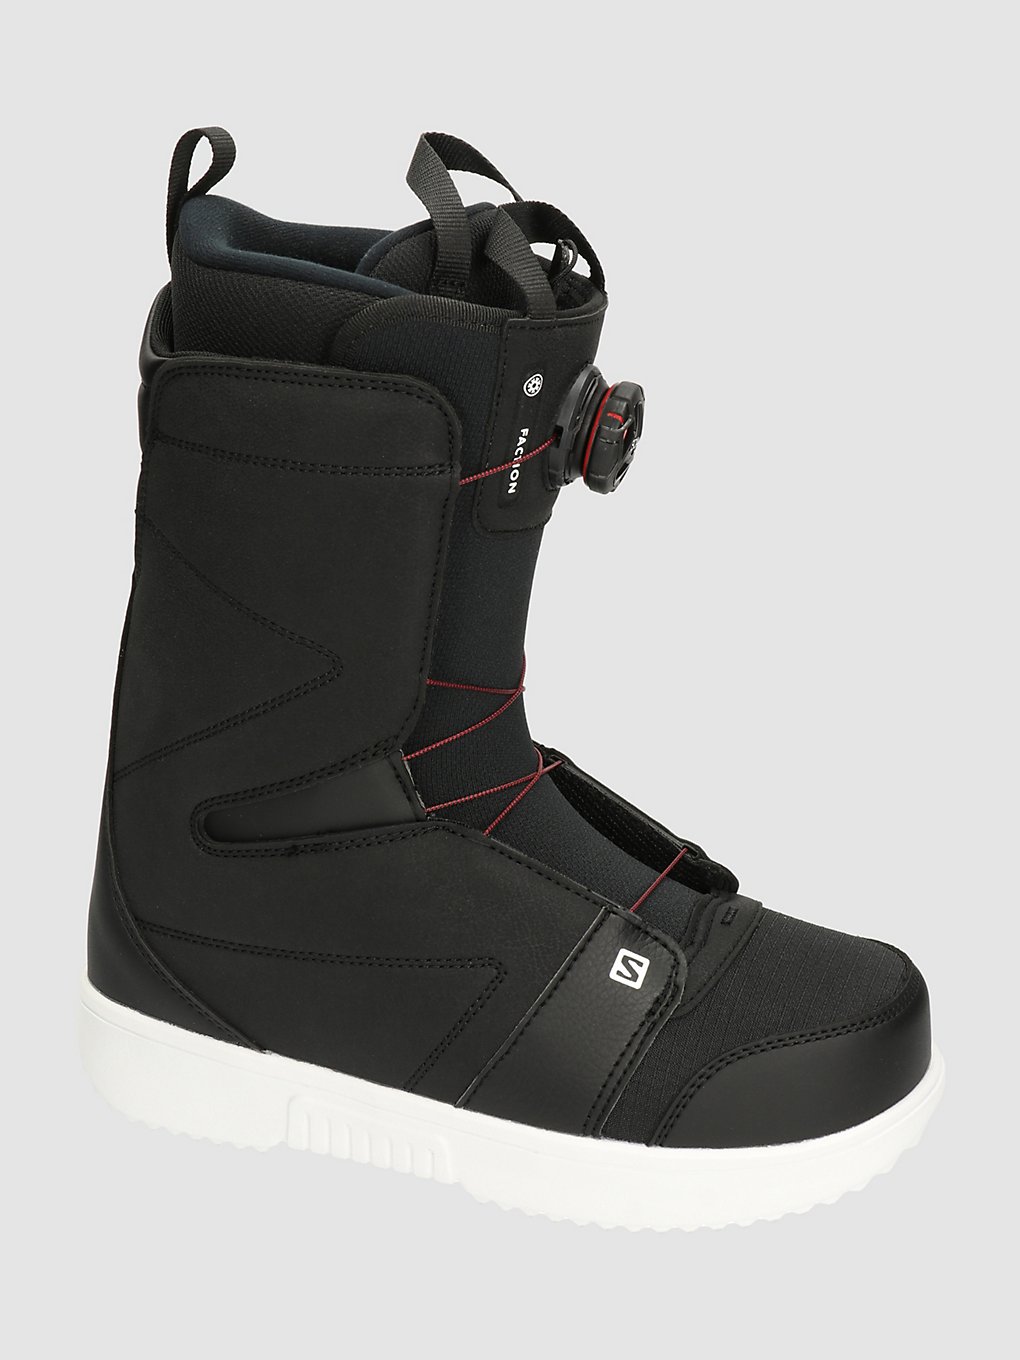 Salomon Faction Boa 2022 Snowboard-Boots white kaufen